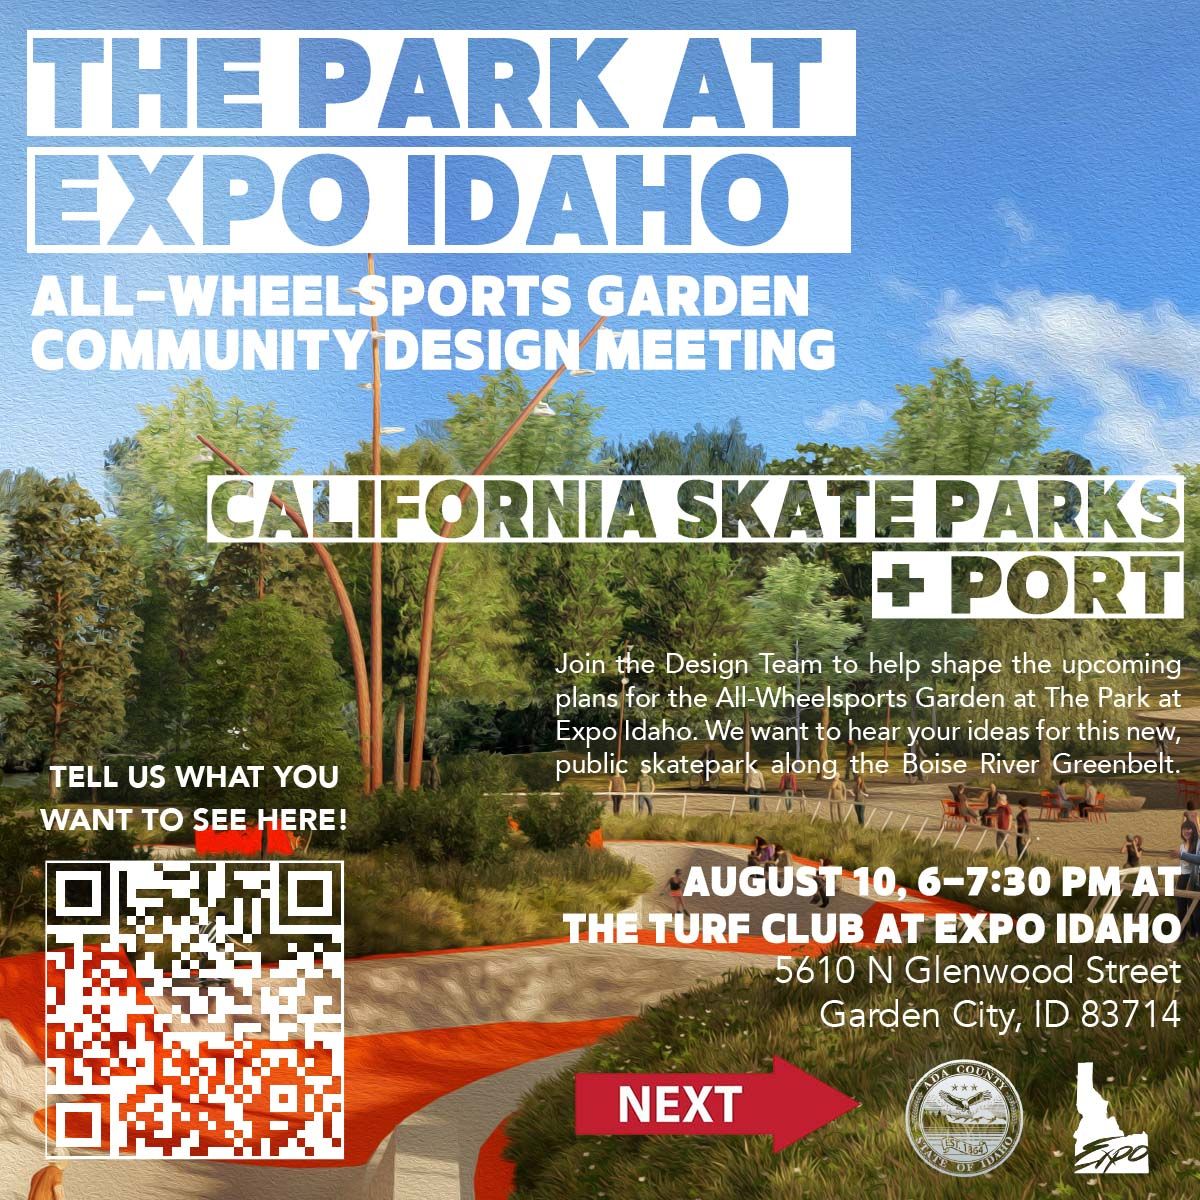 Expo Idaho All-Wheel Sports Garden community design meeting flyer